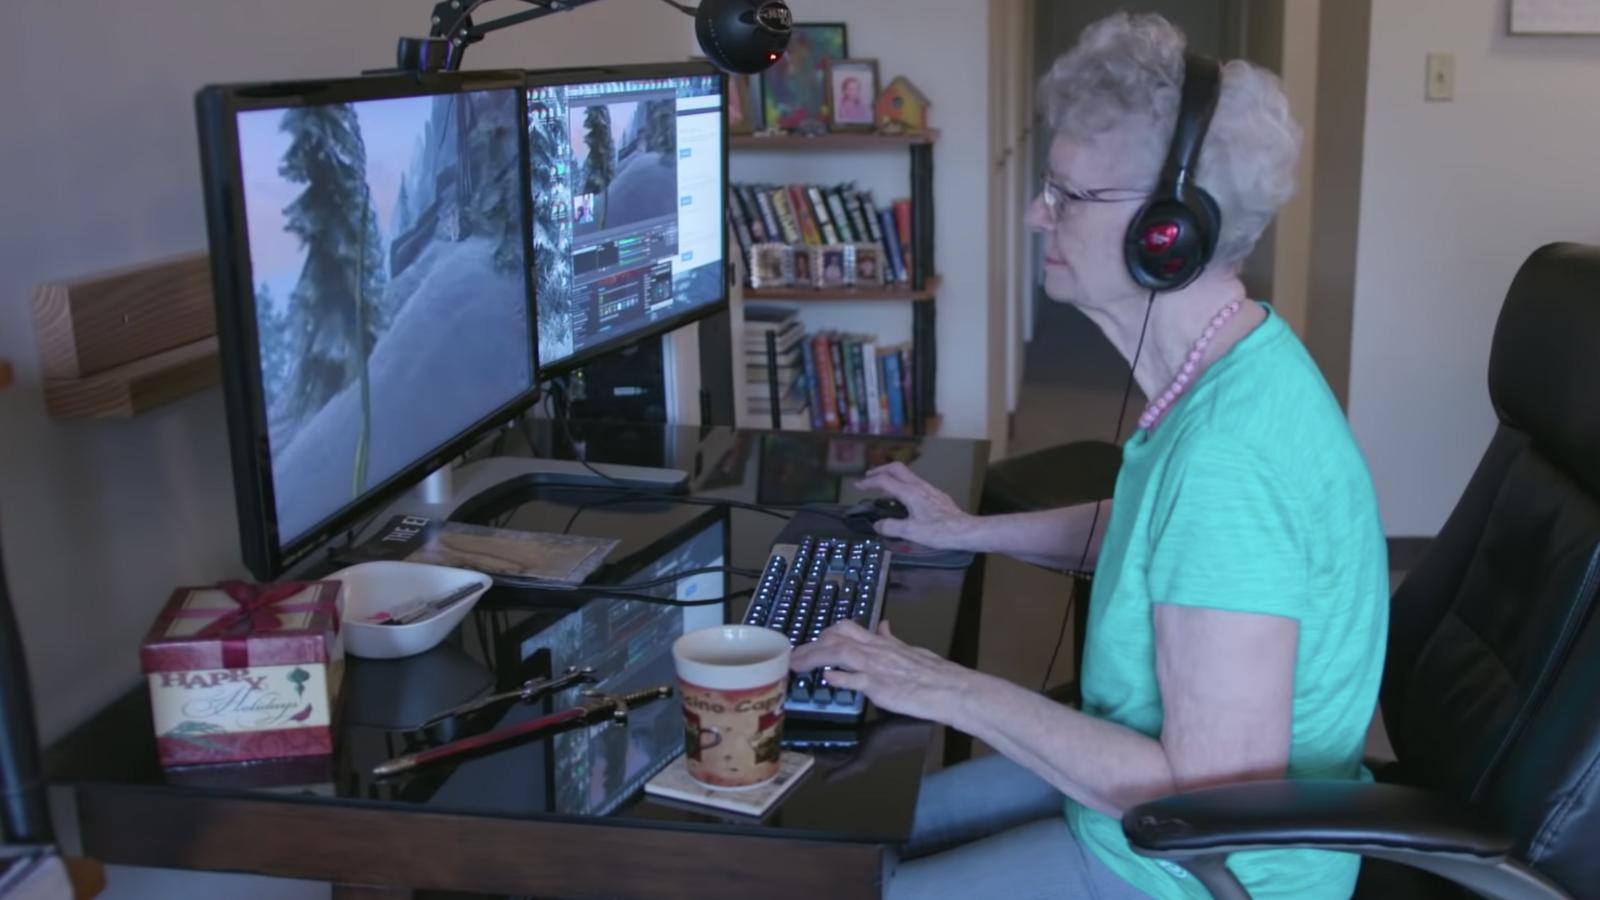 Grandma playing Skyrim